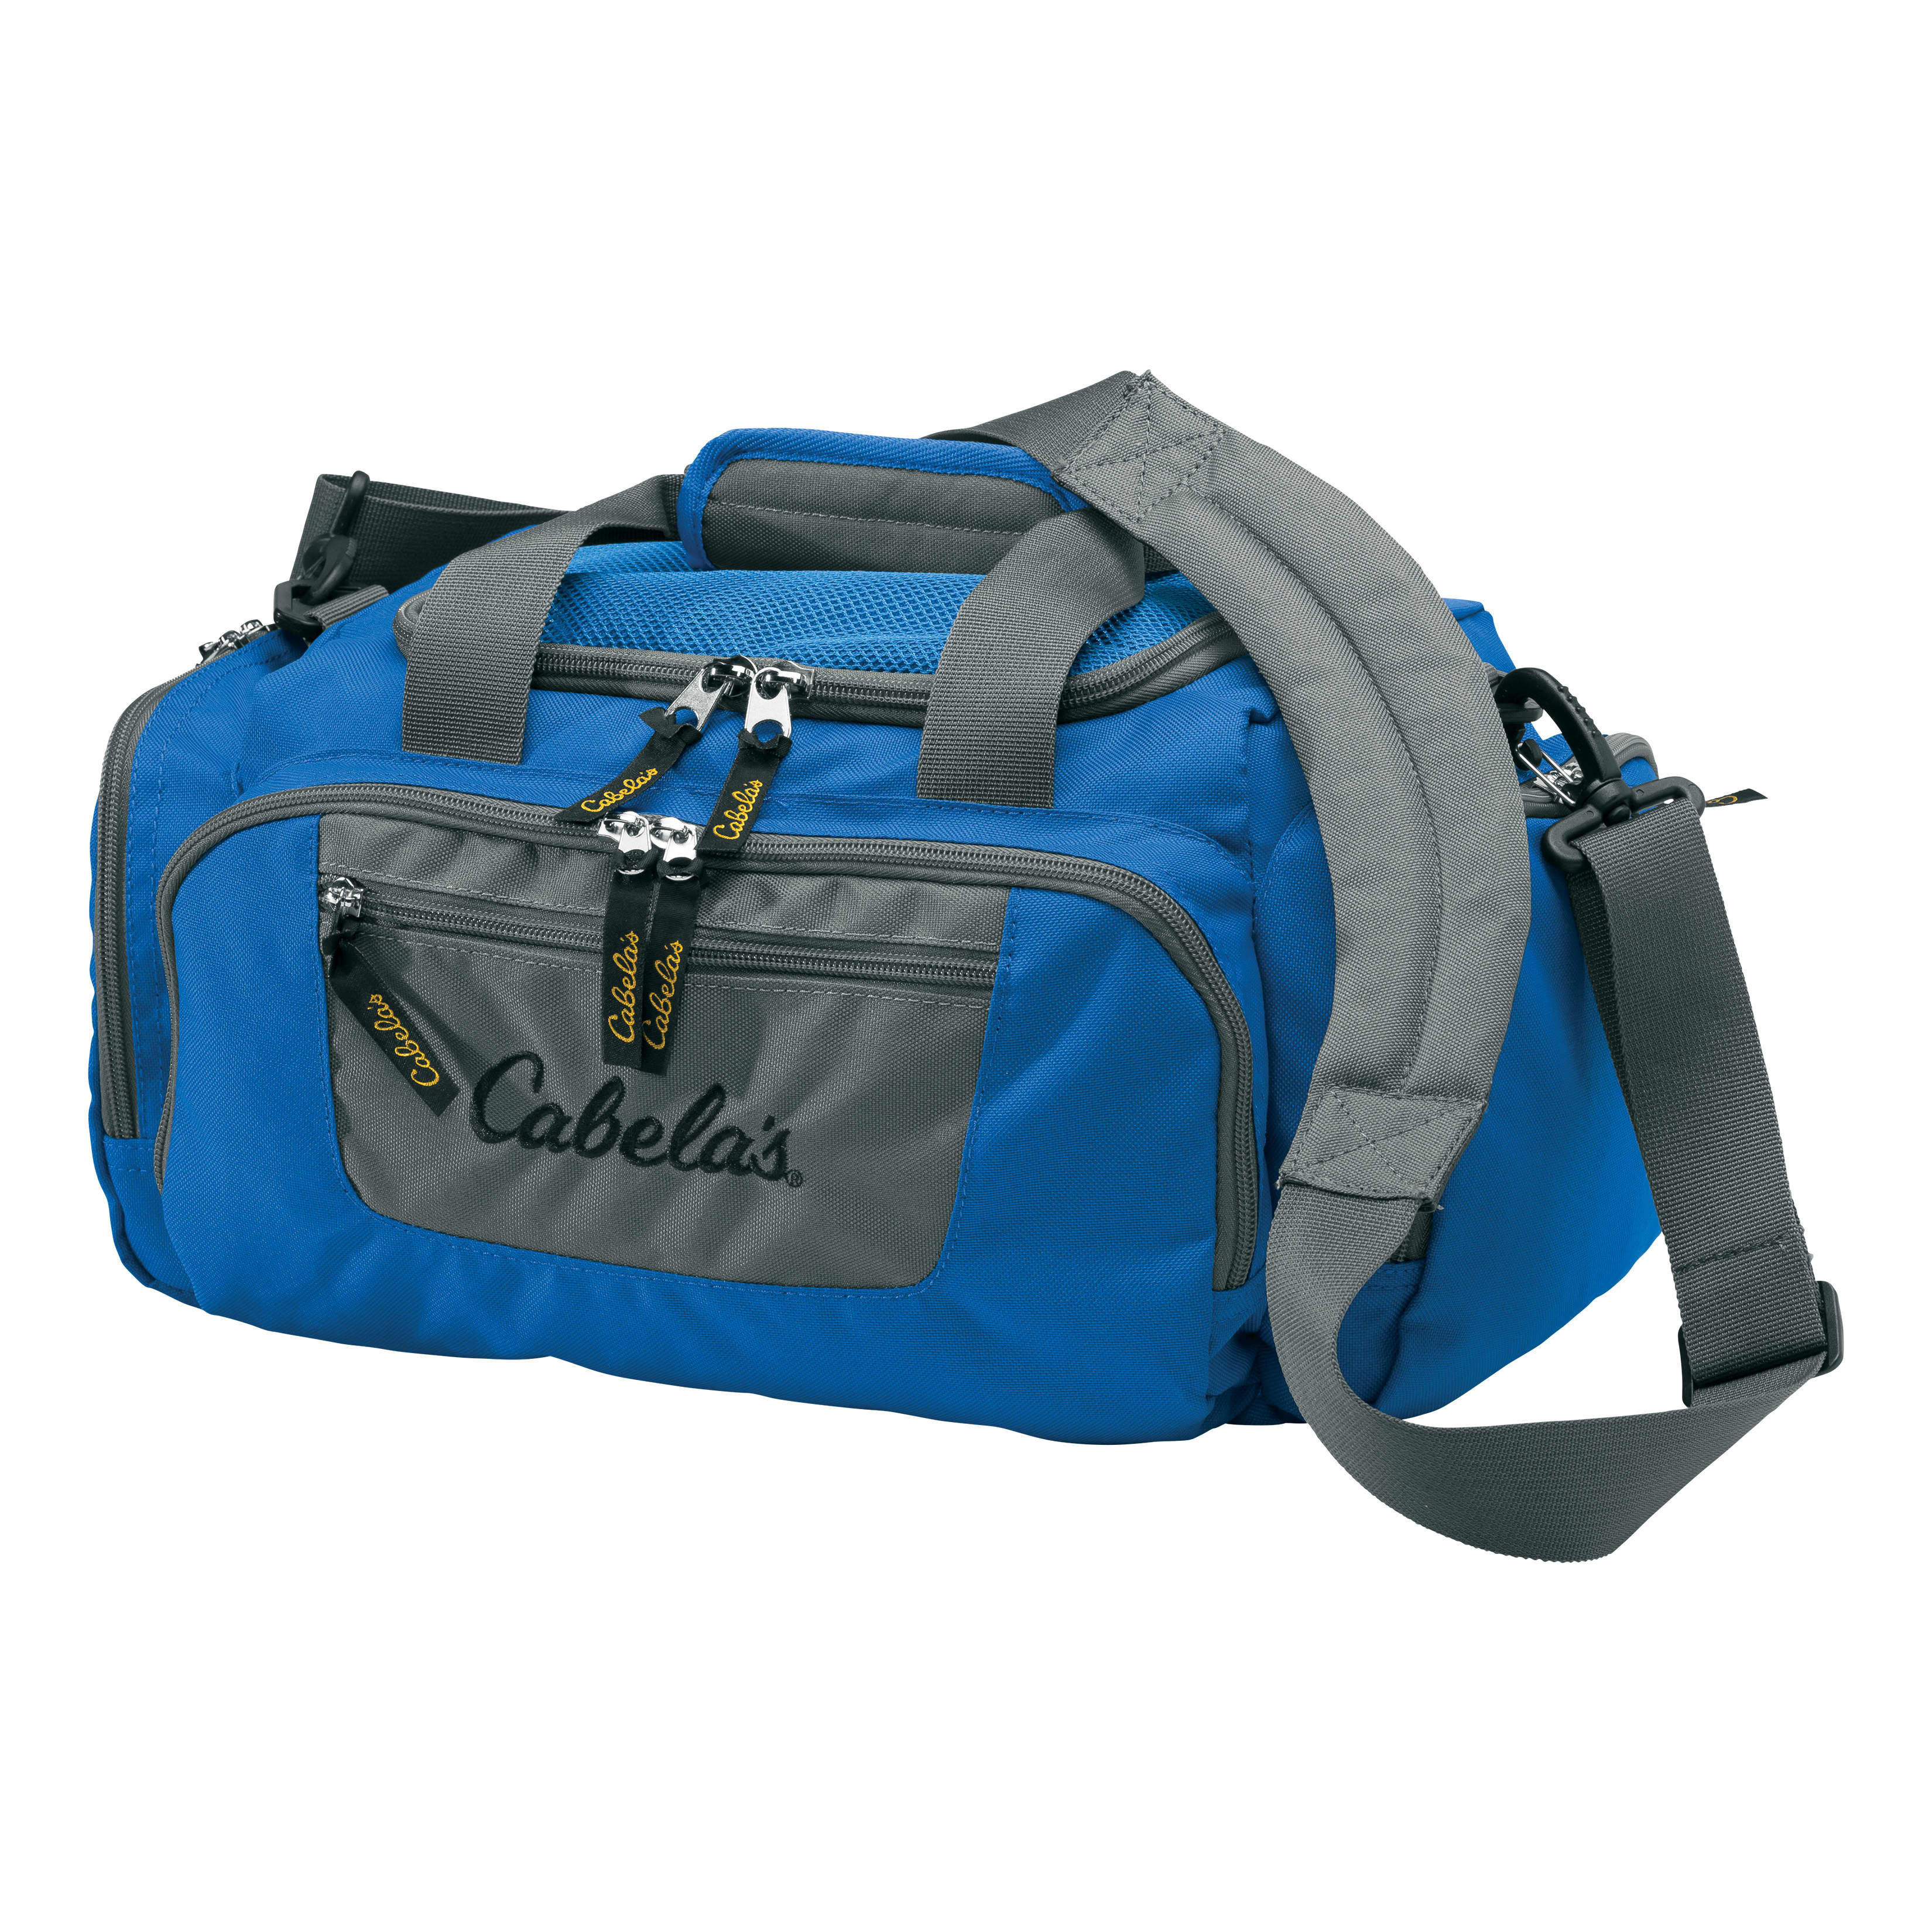 Cabela's Catch-All Gear Bags - Blue